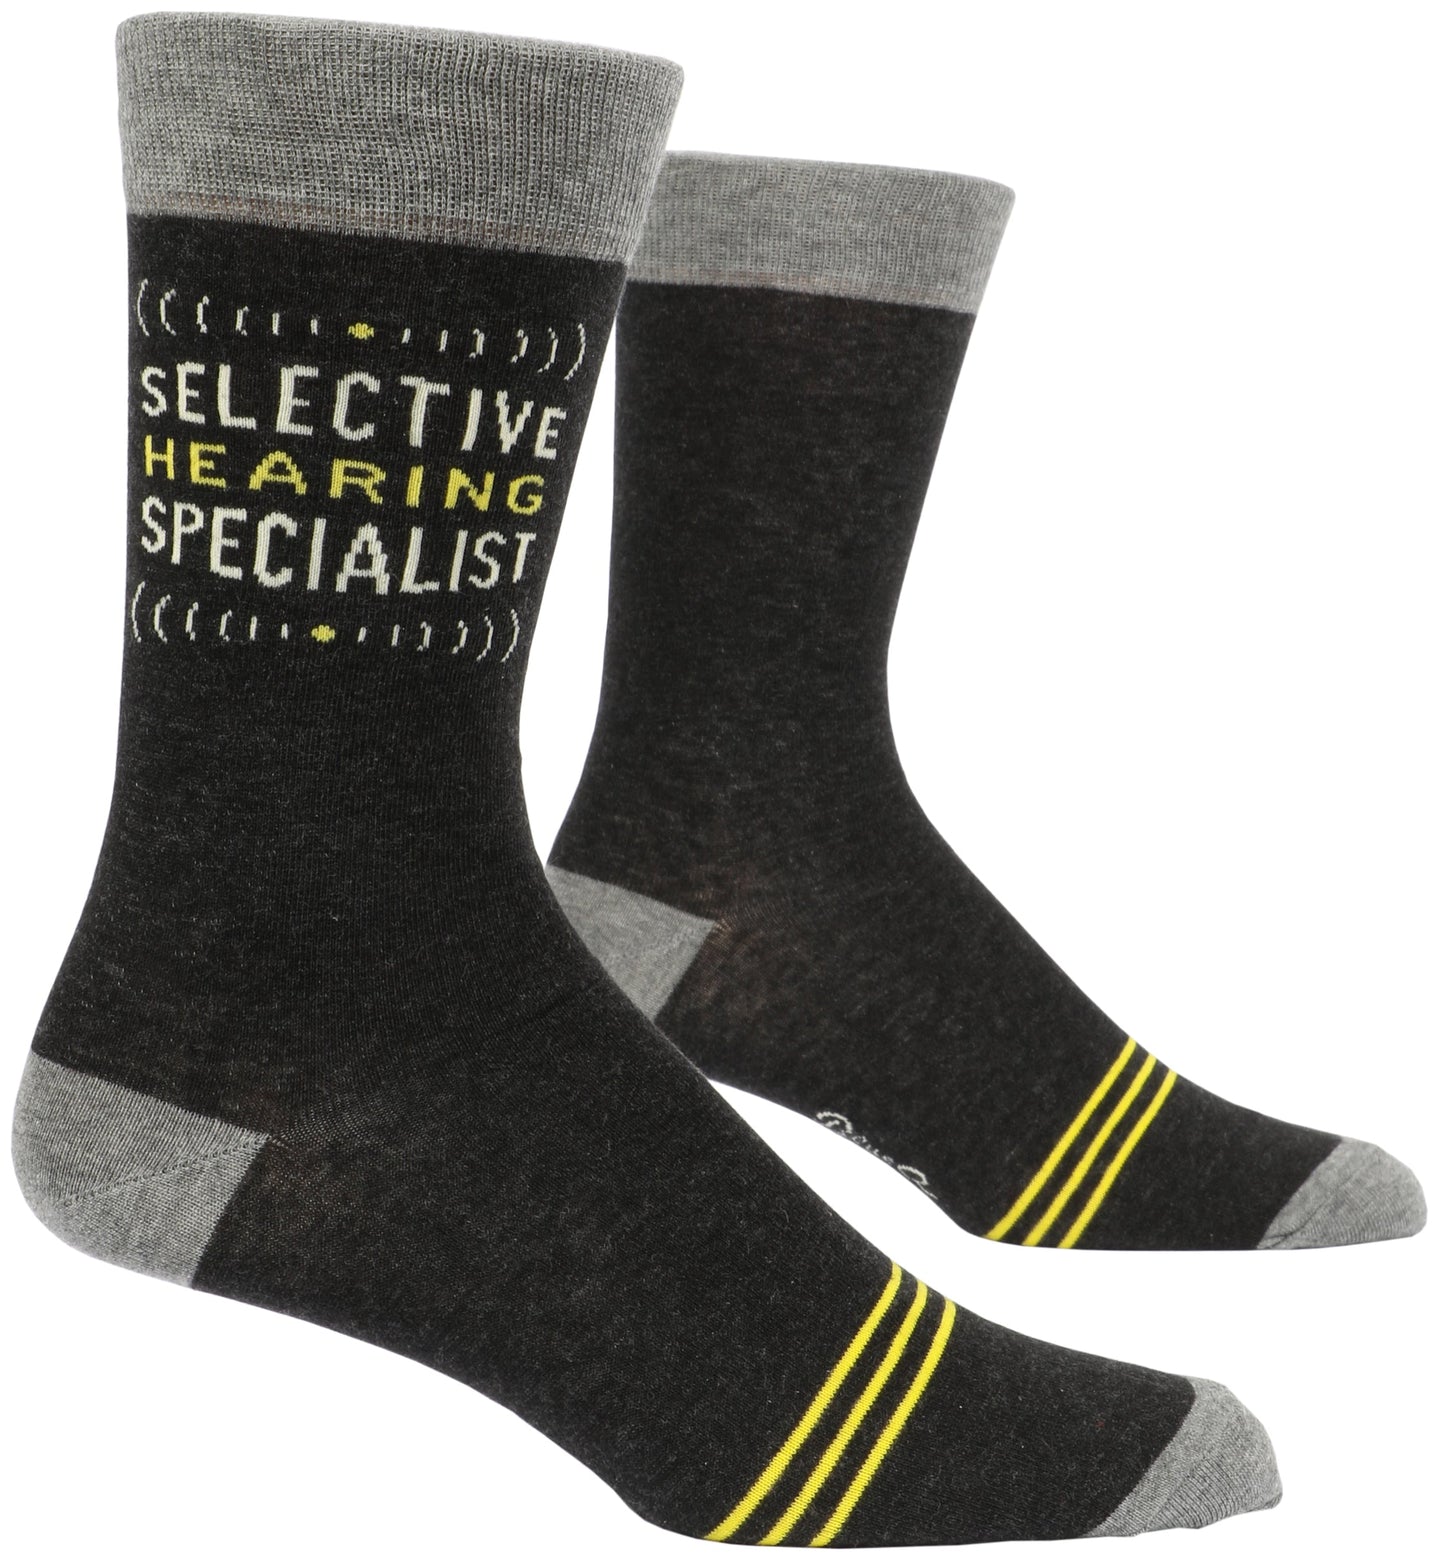 Selective Hearing Specialist Mens Socks